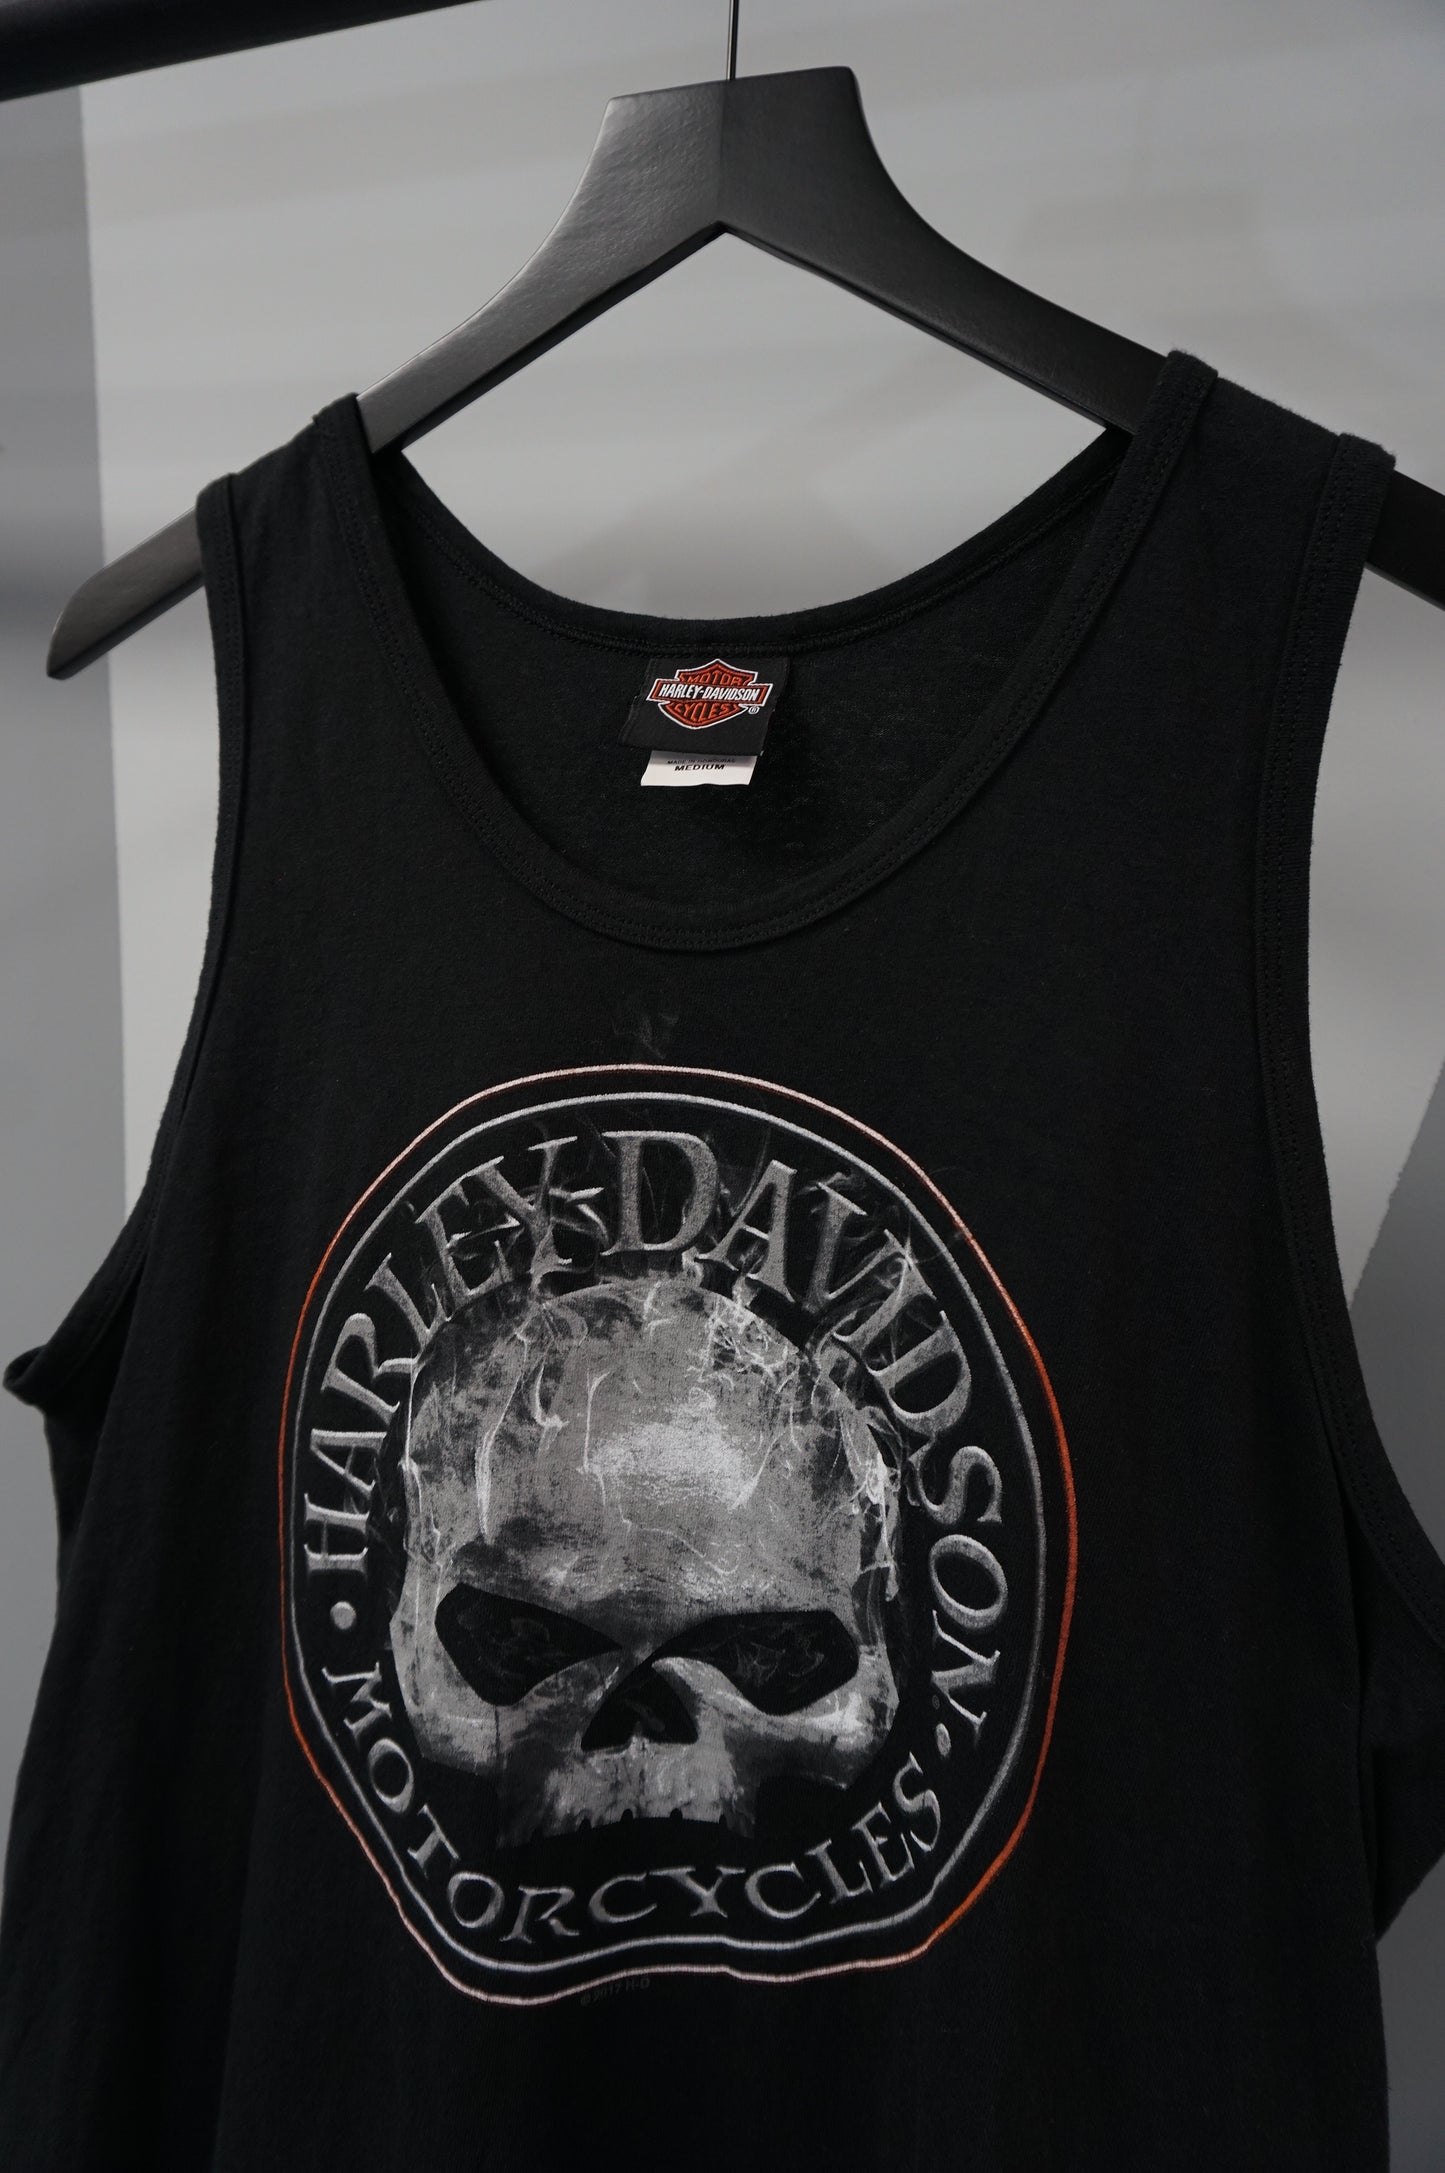 (M) Angleton Harley Davidson Muscle T-Shirt